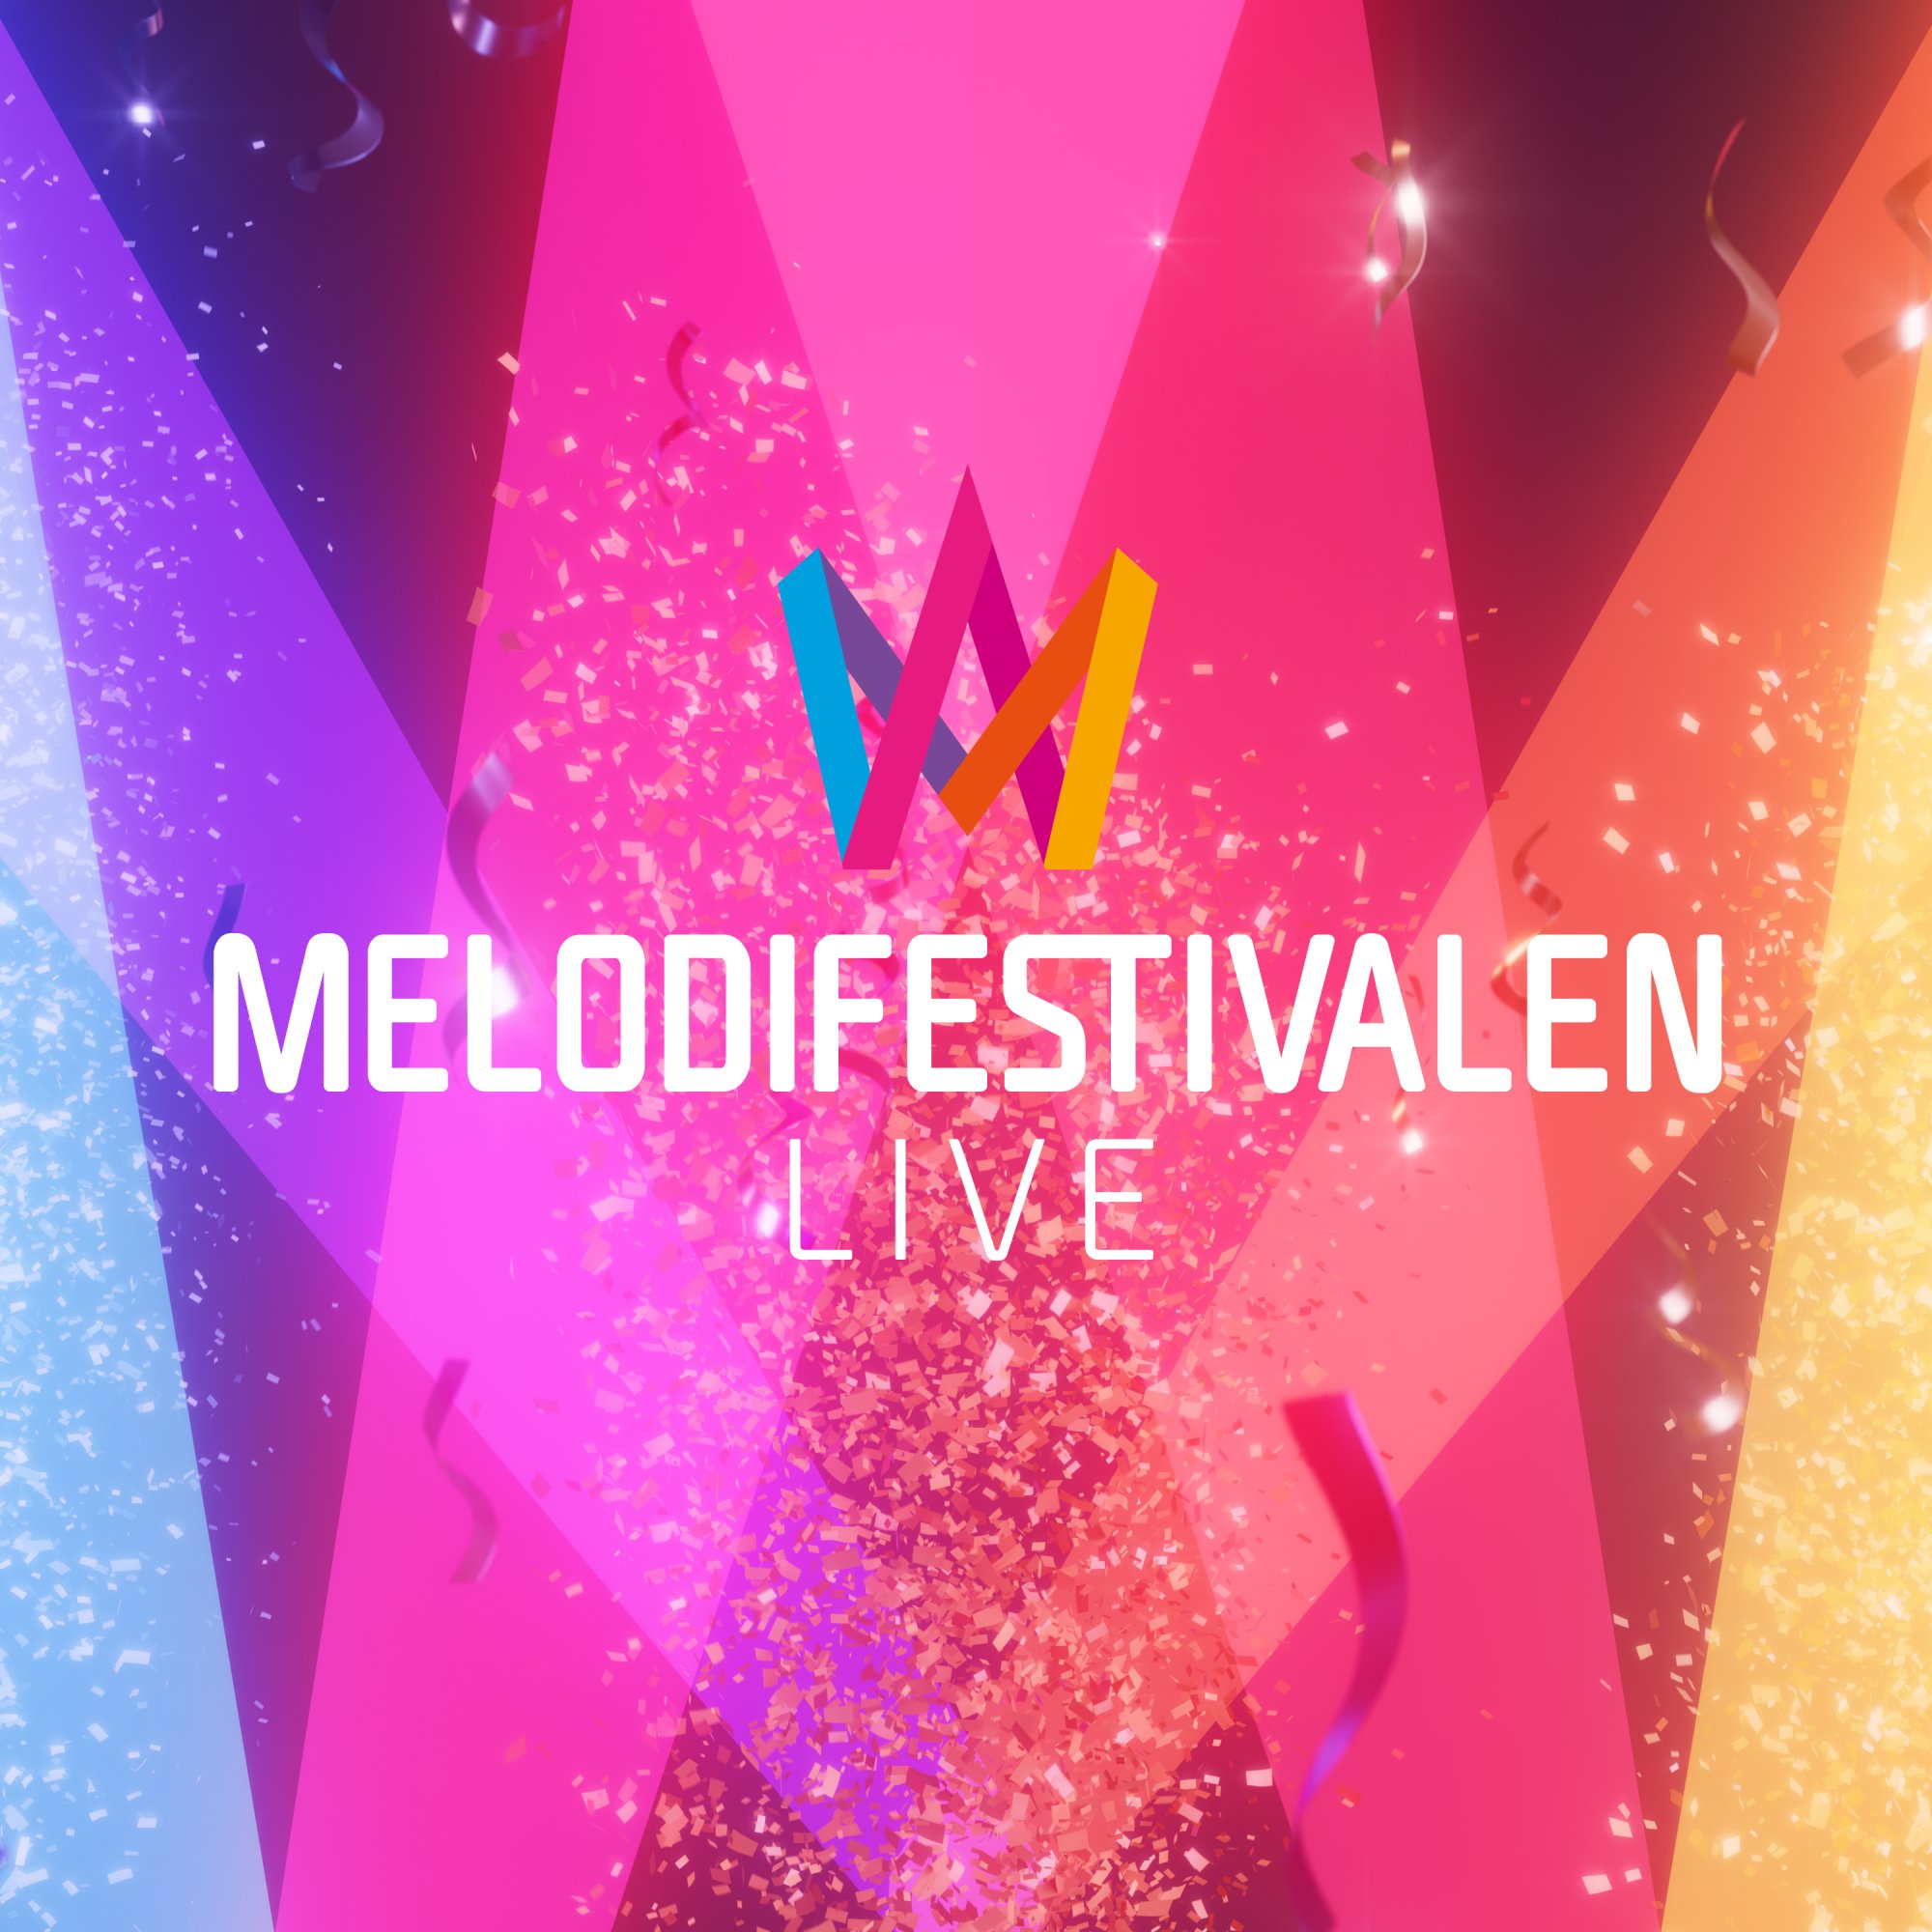 Melodifestivalen 2024